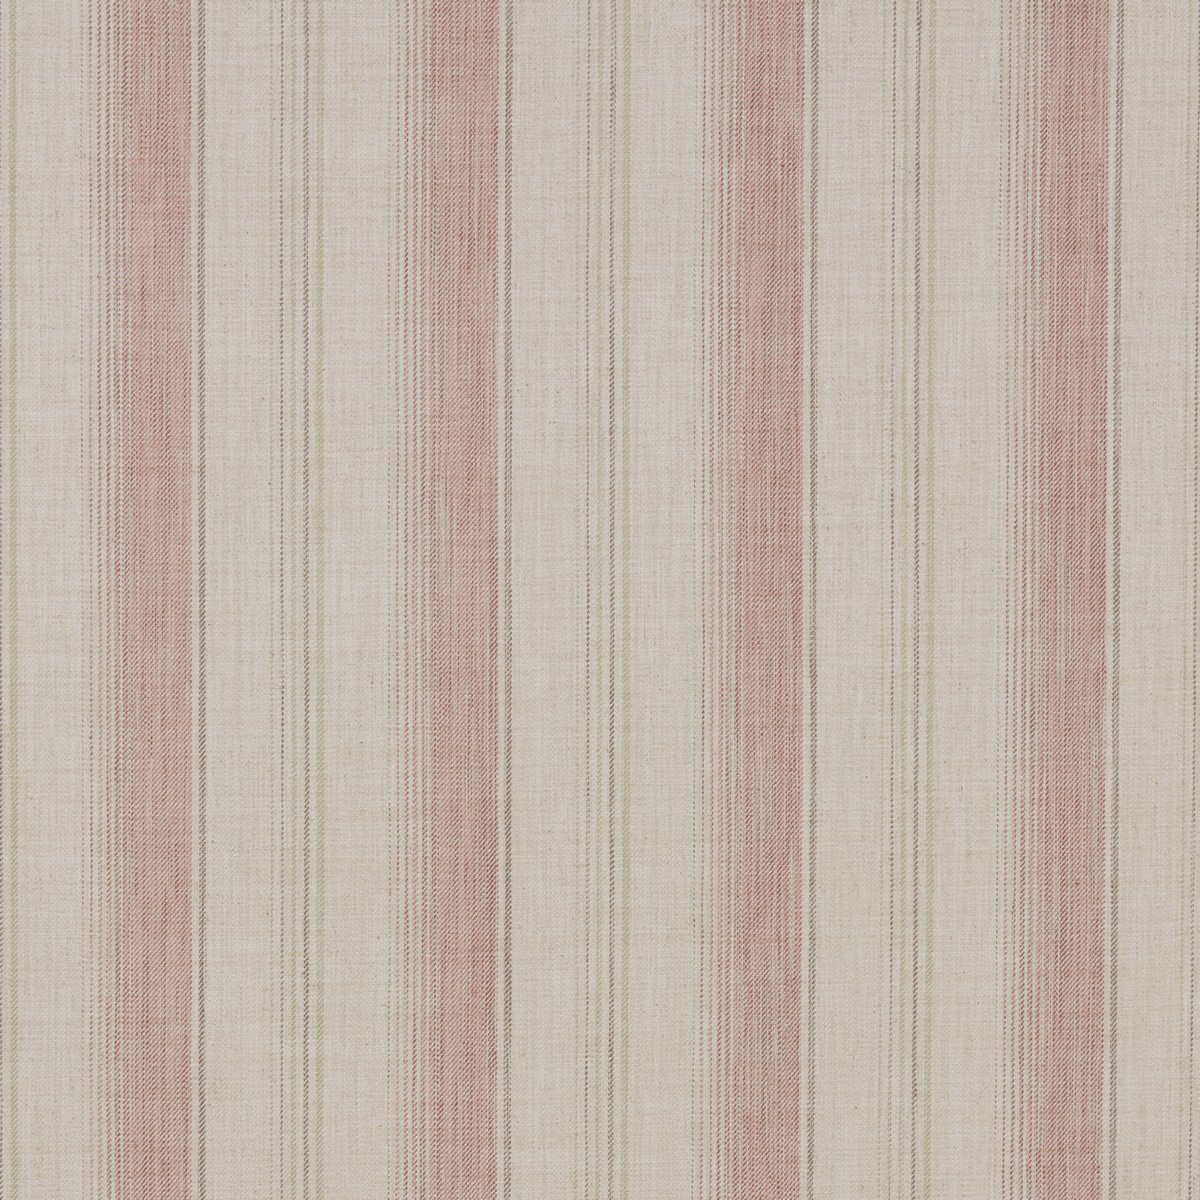 Sackville Stripe Rosa Fabric by iLiv